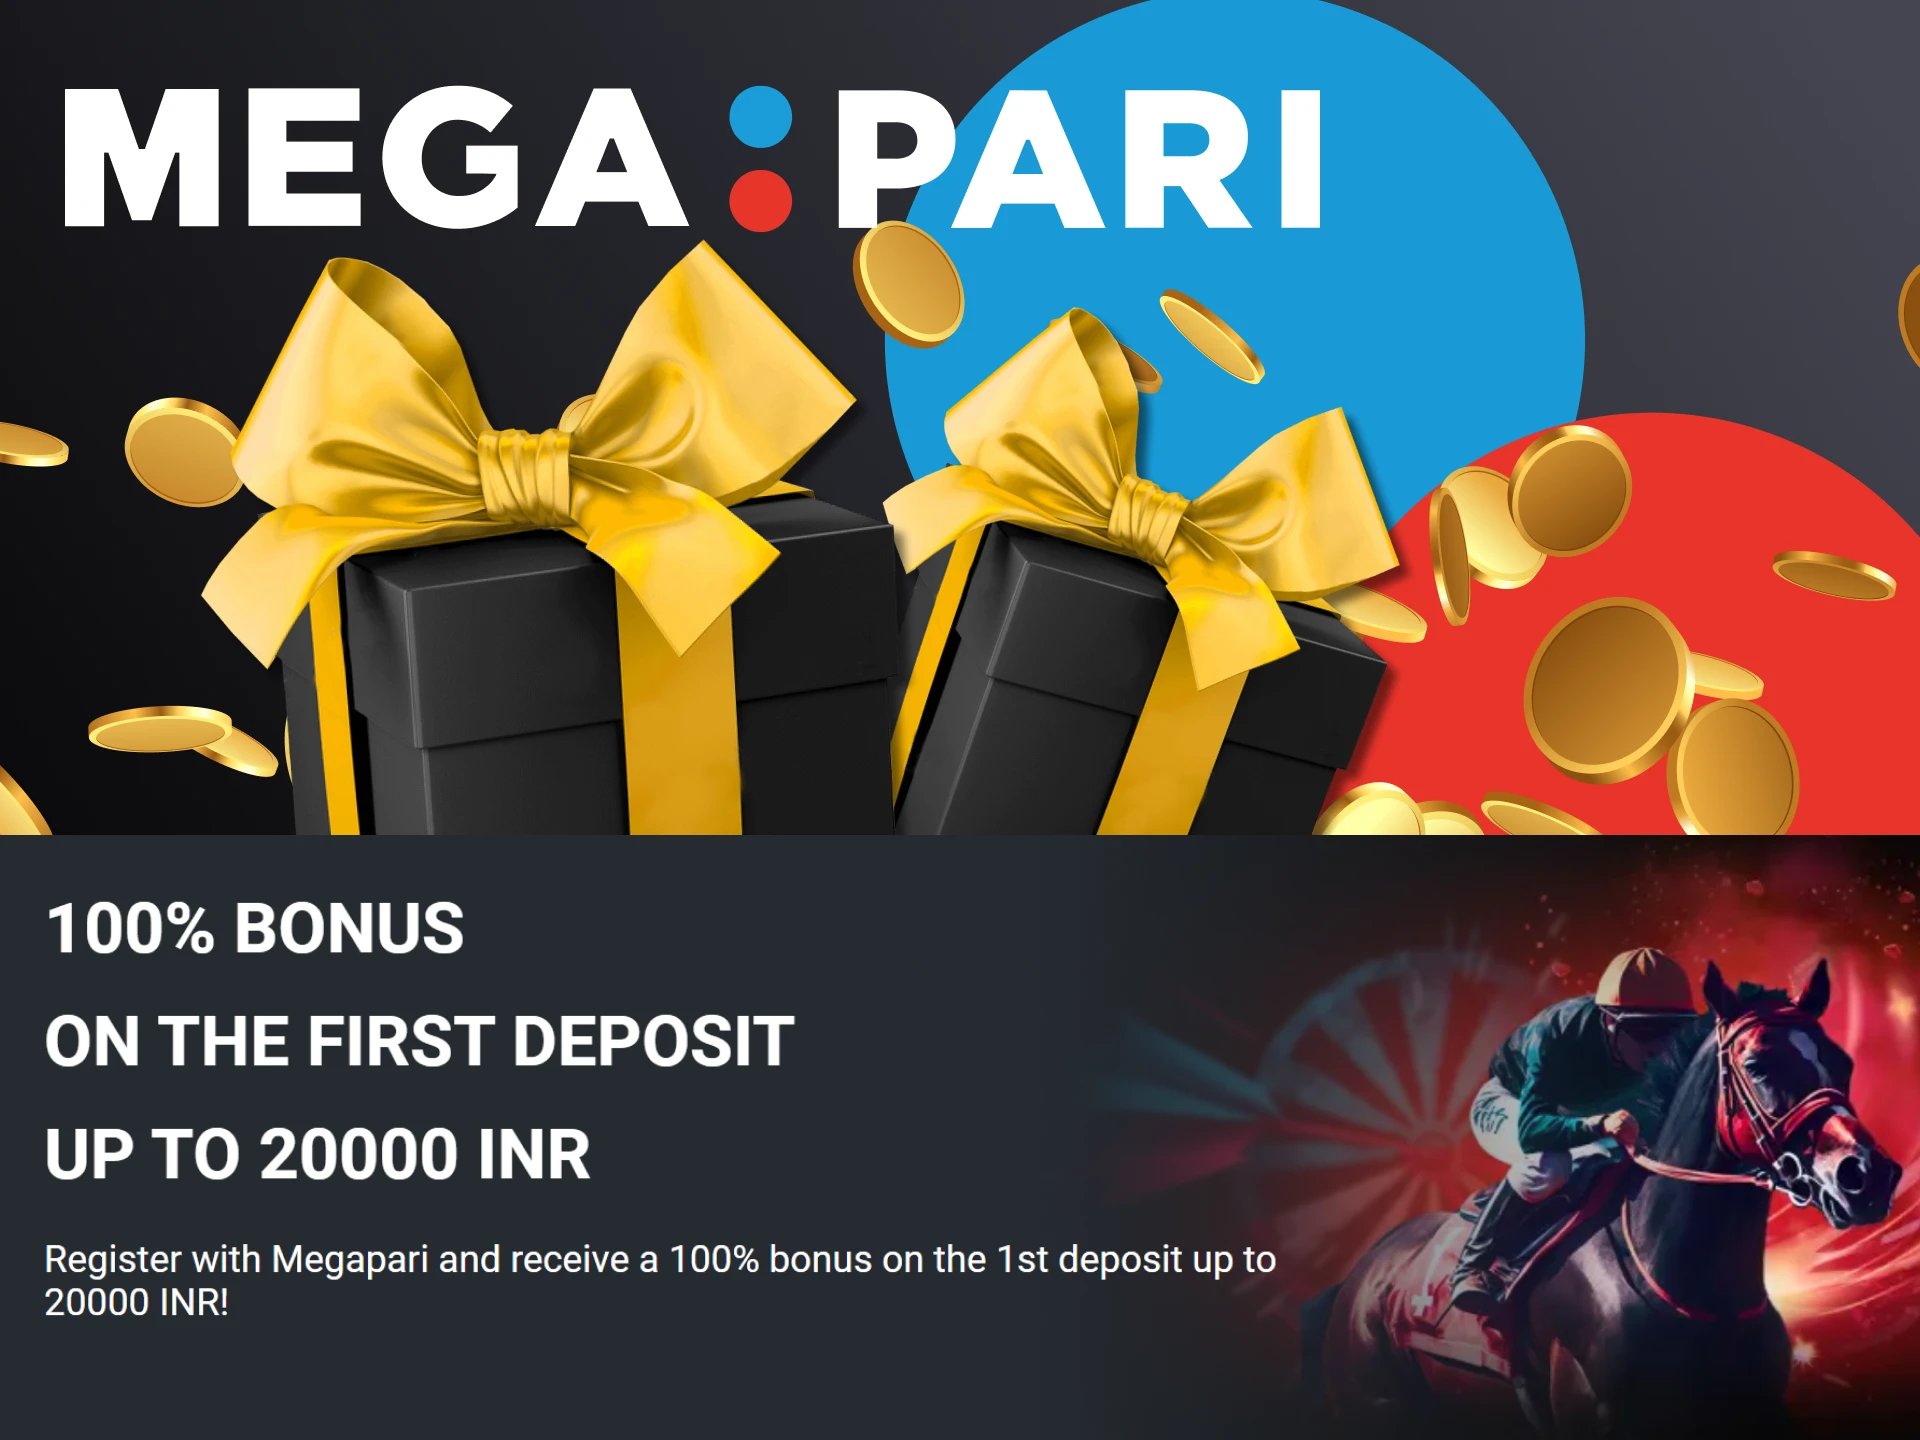 Get a 100% bonus of up to INR 20,000 when making a first Megapari deposit.